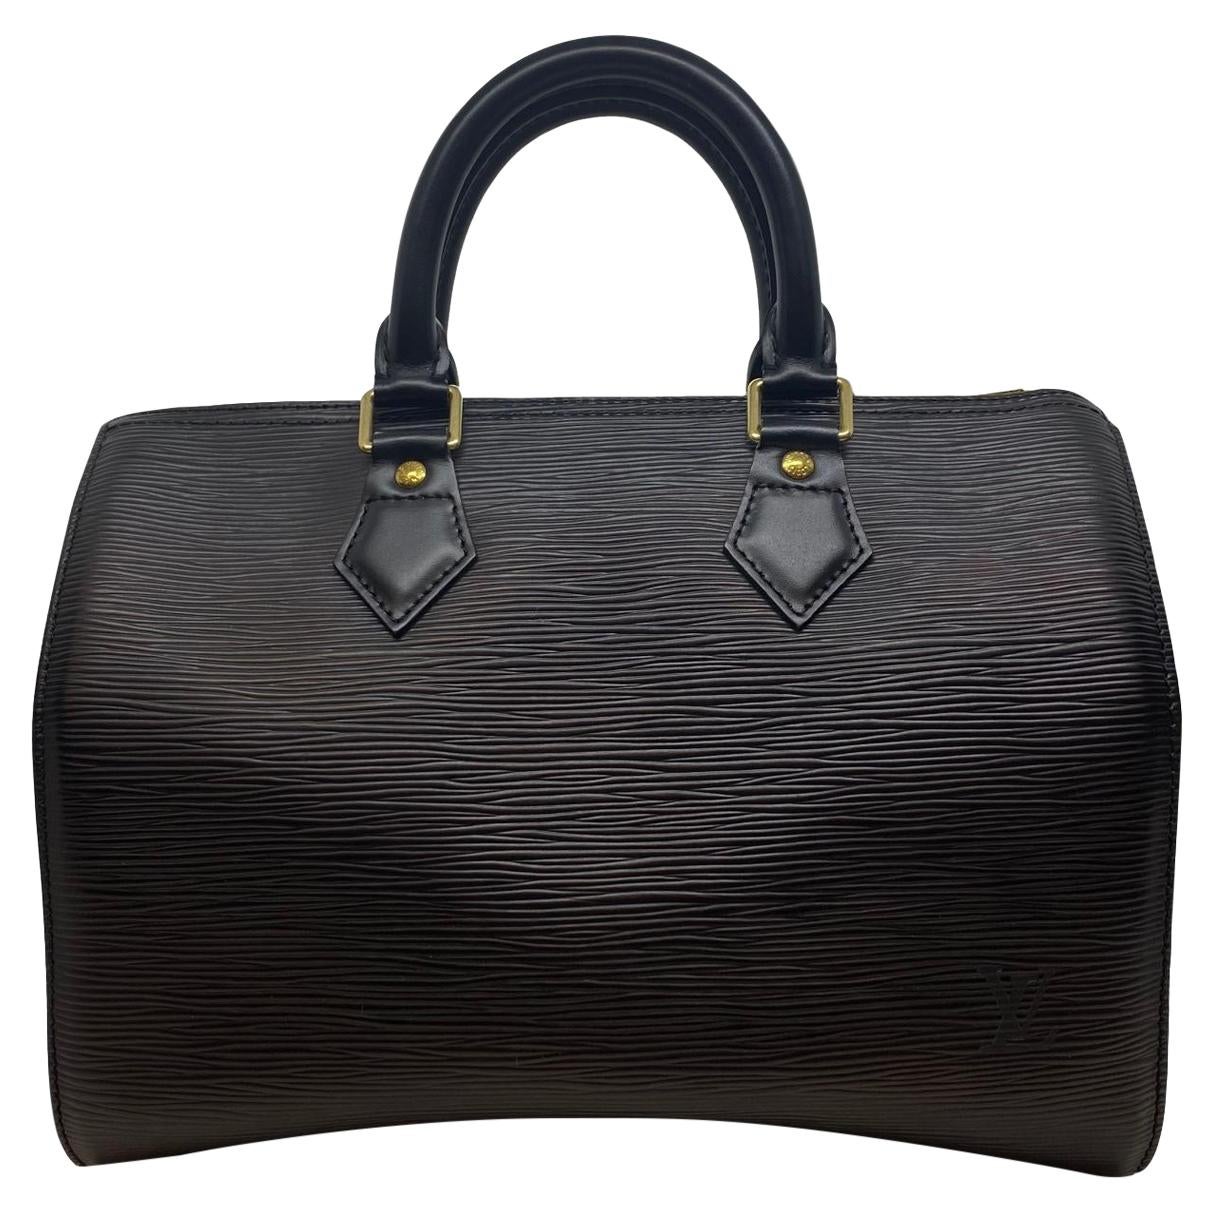 Louis Vuitton Speedy 25 Black EPI Leather Handbag, France 2002.